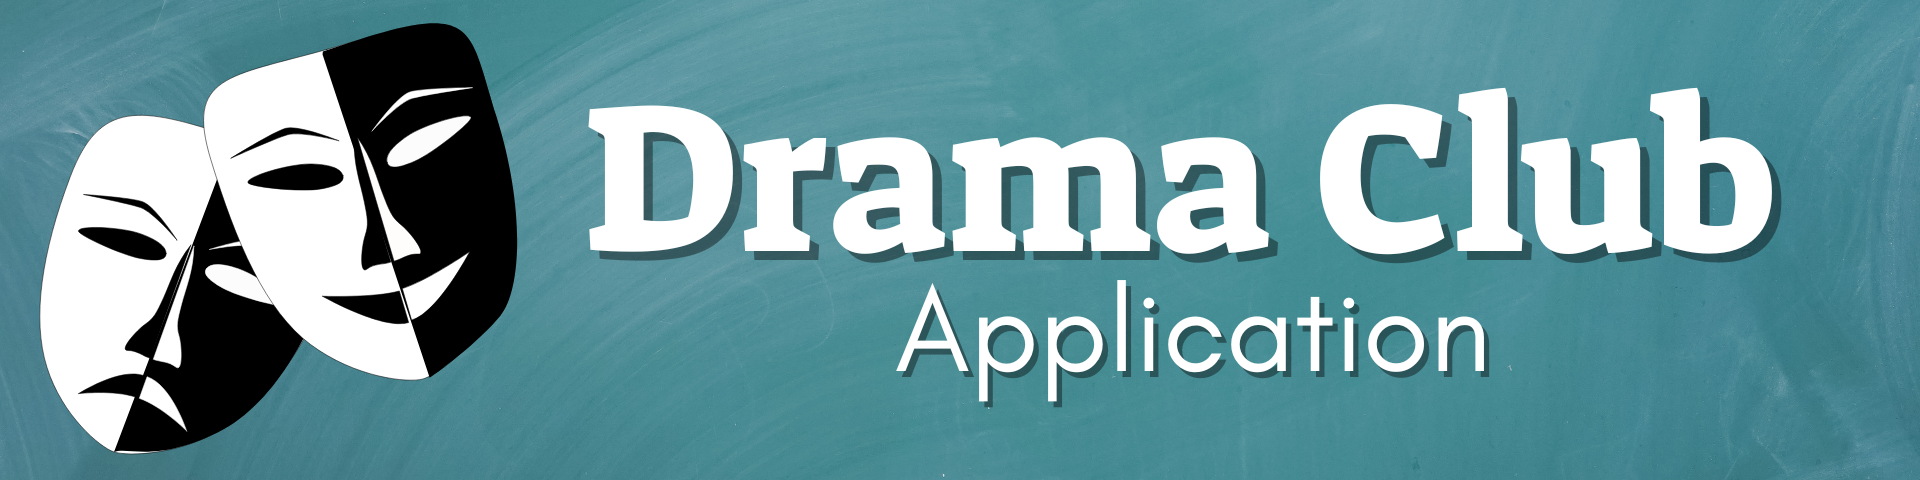 Drama  Club Information and Application